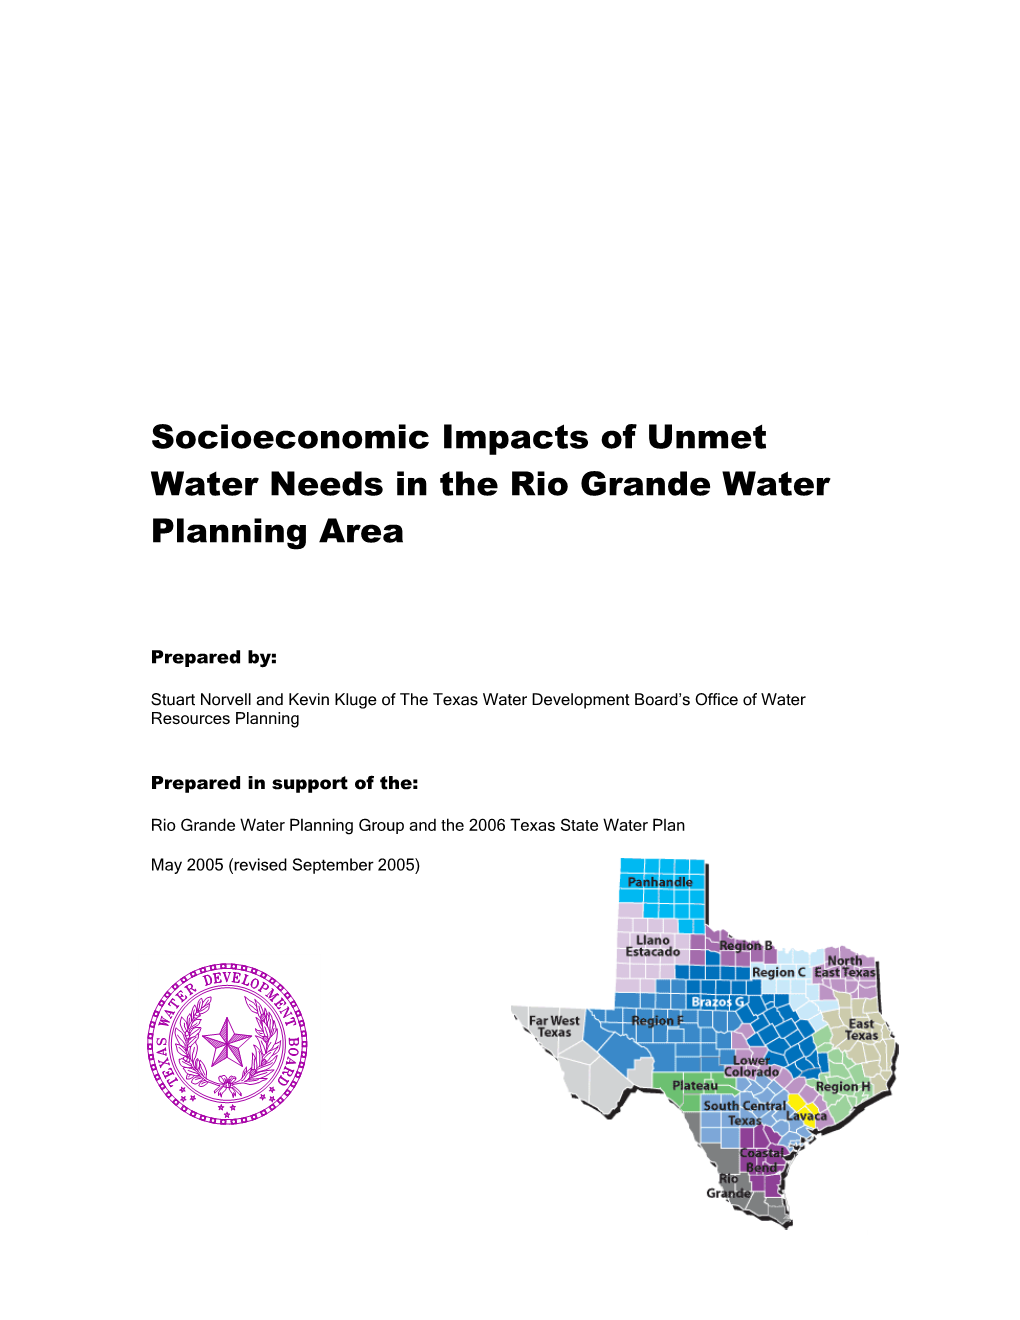 Socioeconomic Impacts of Unmet Water Needs in the Rio Grandewater Planning Area